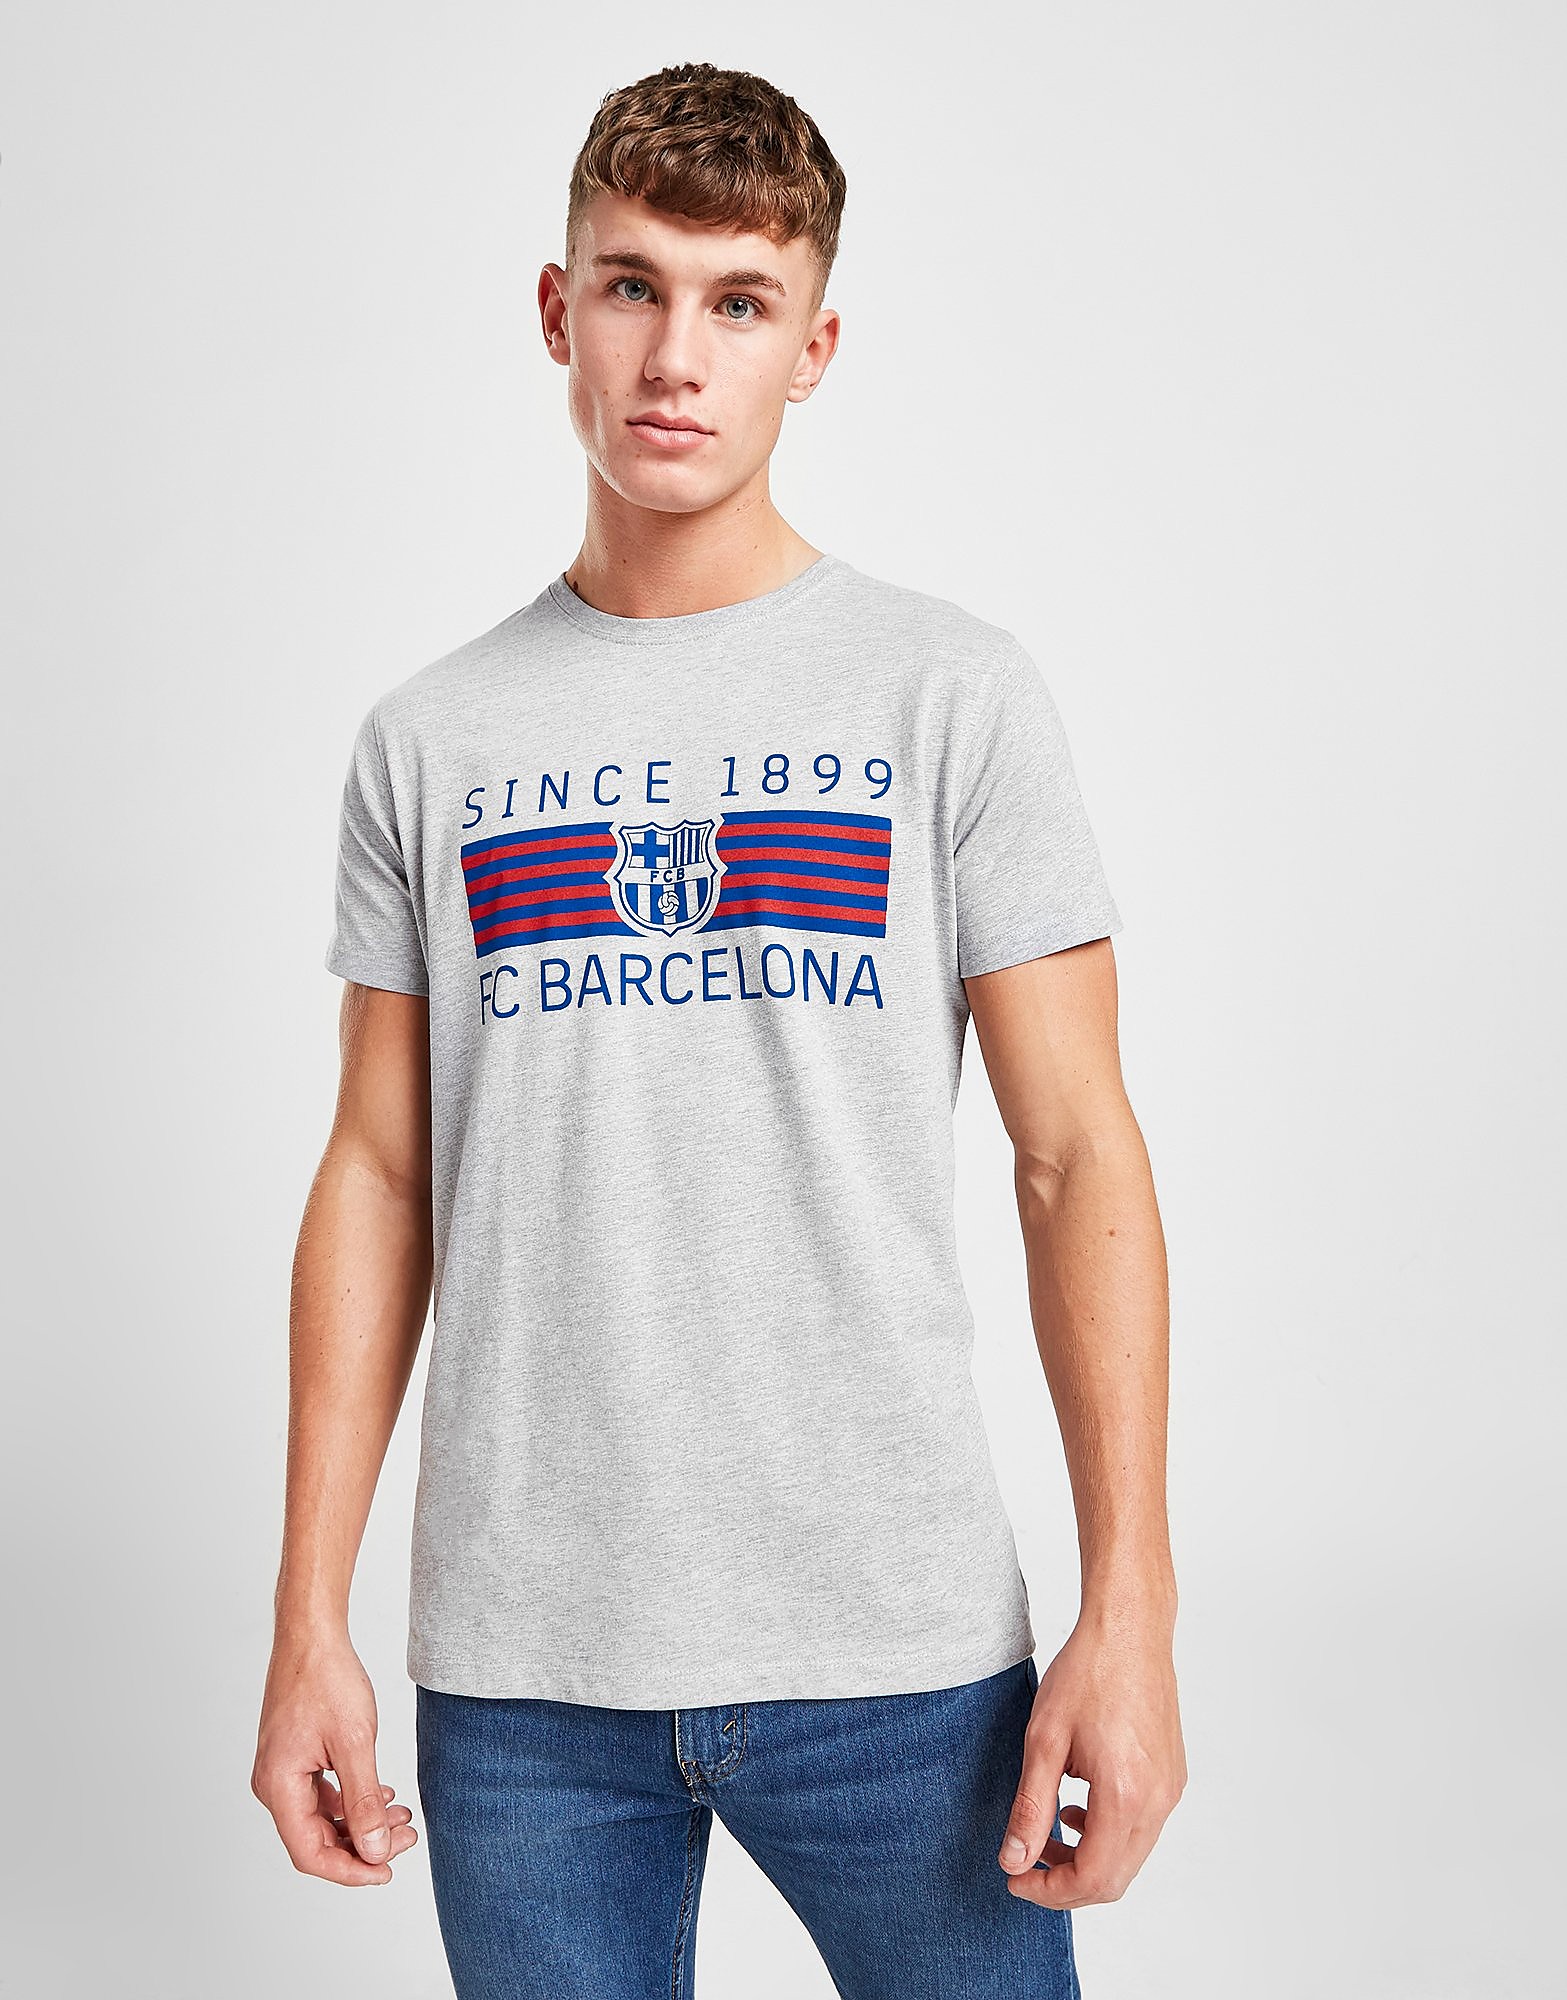 Official Team T-Shirt FC Barcelona 1899 - Cinzento - Mens, Cinzento